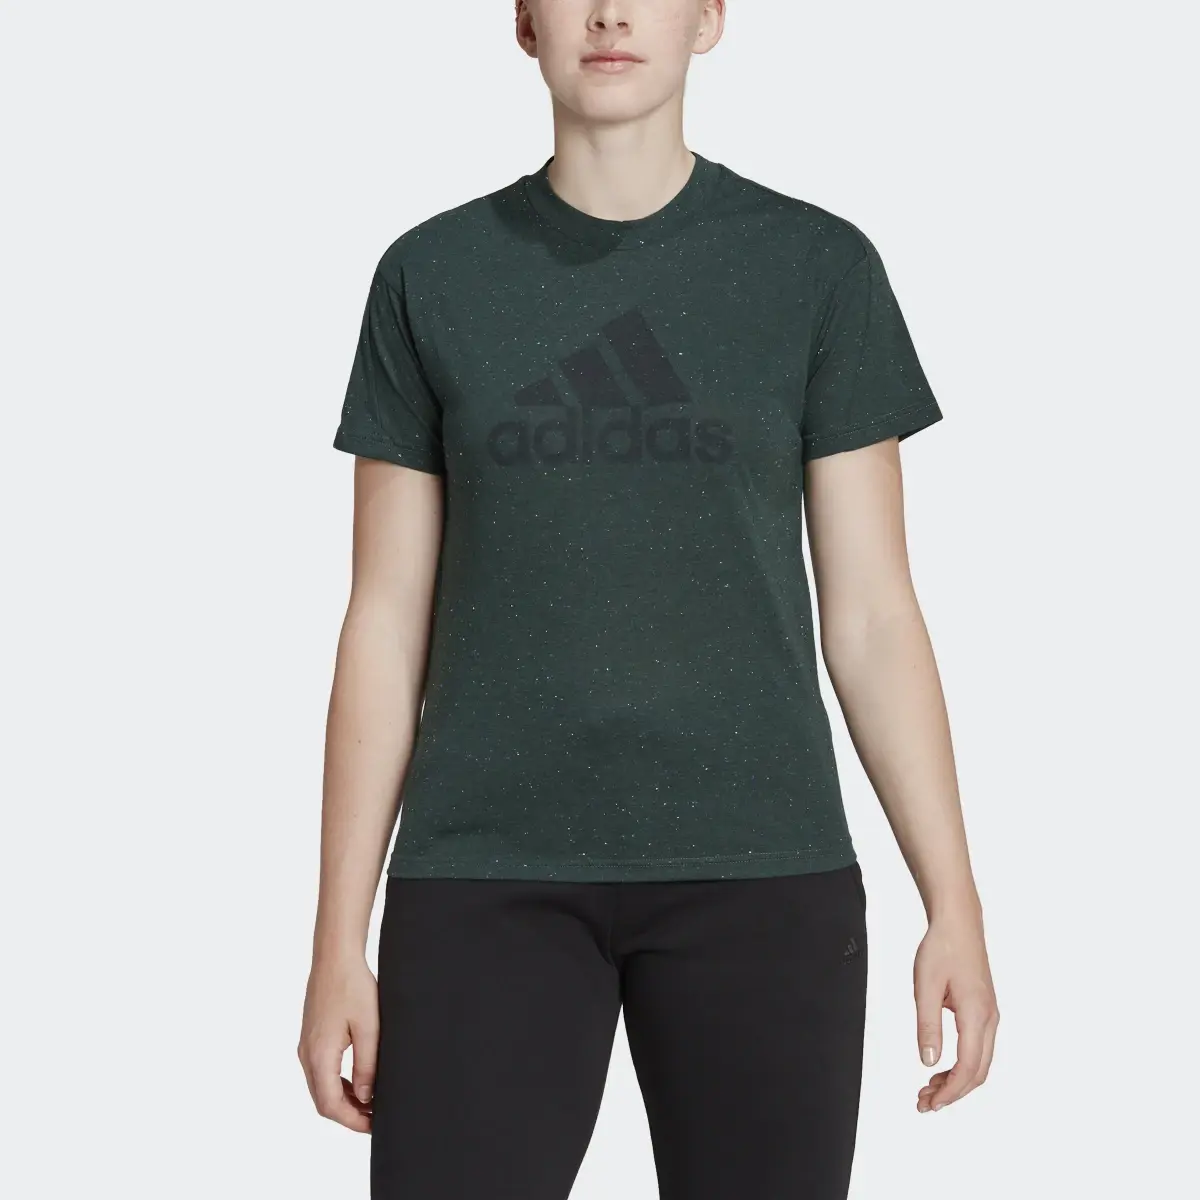 Adidas T-shirt Future Icons Winners 3. 1